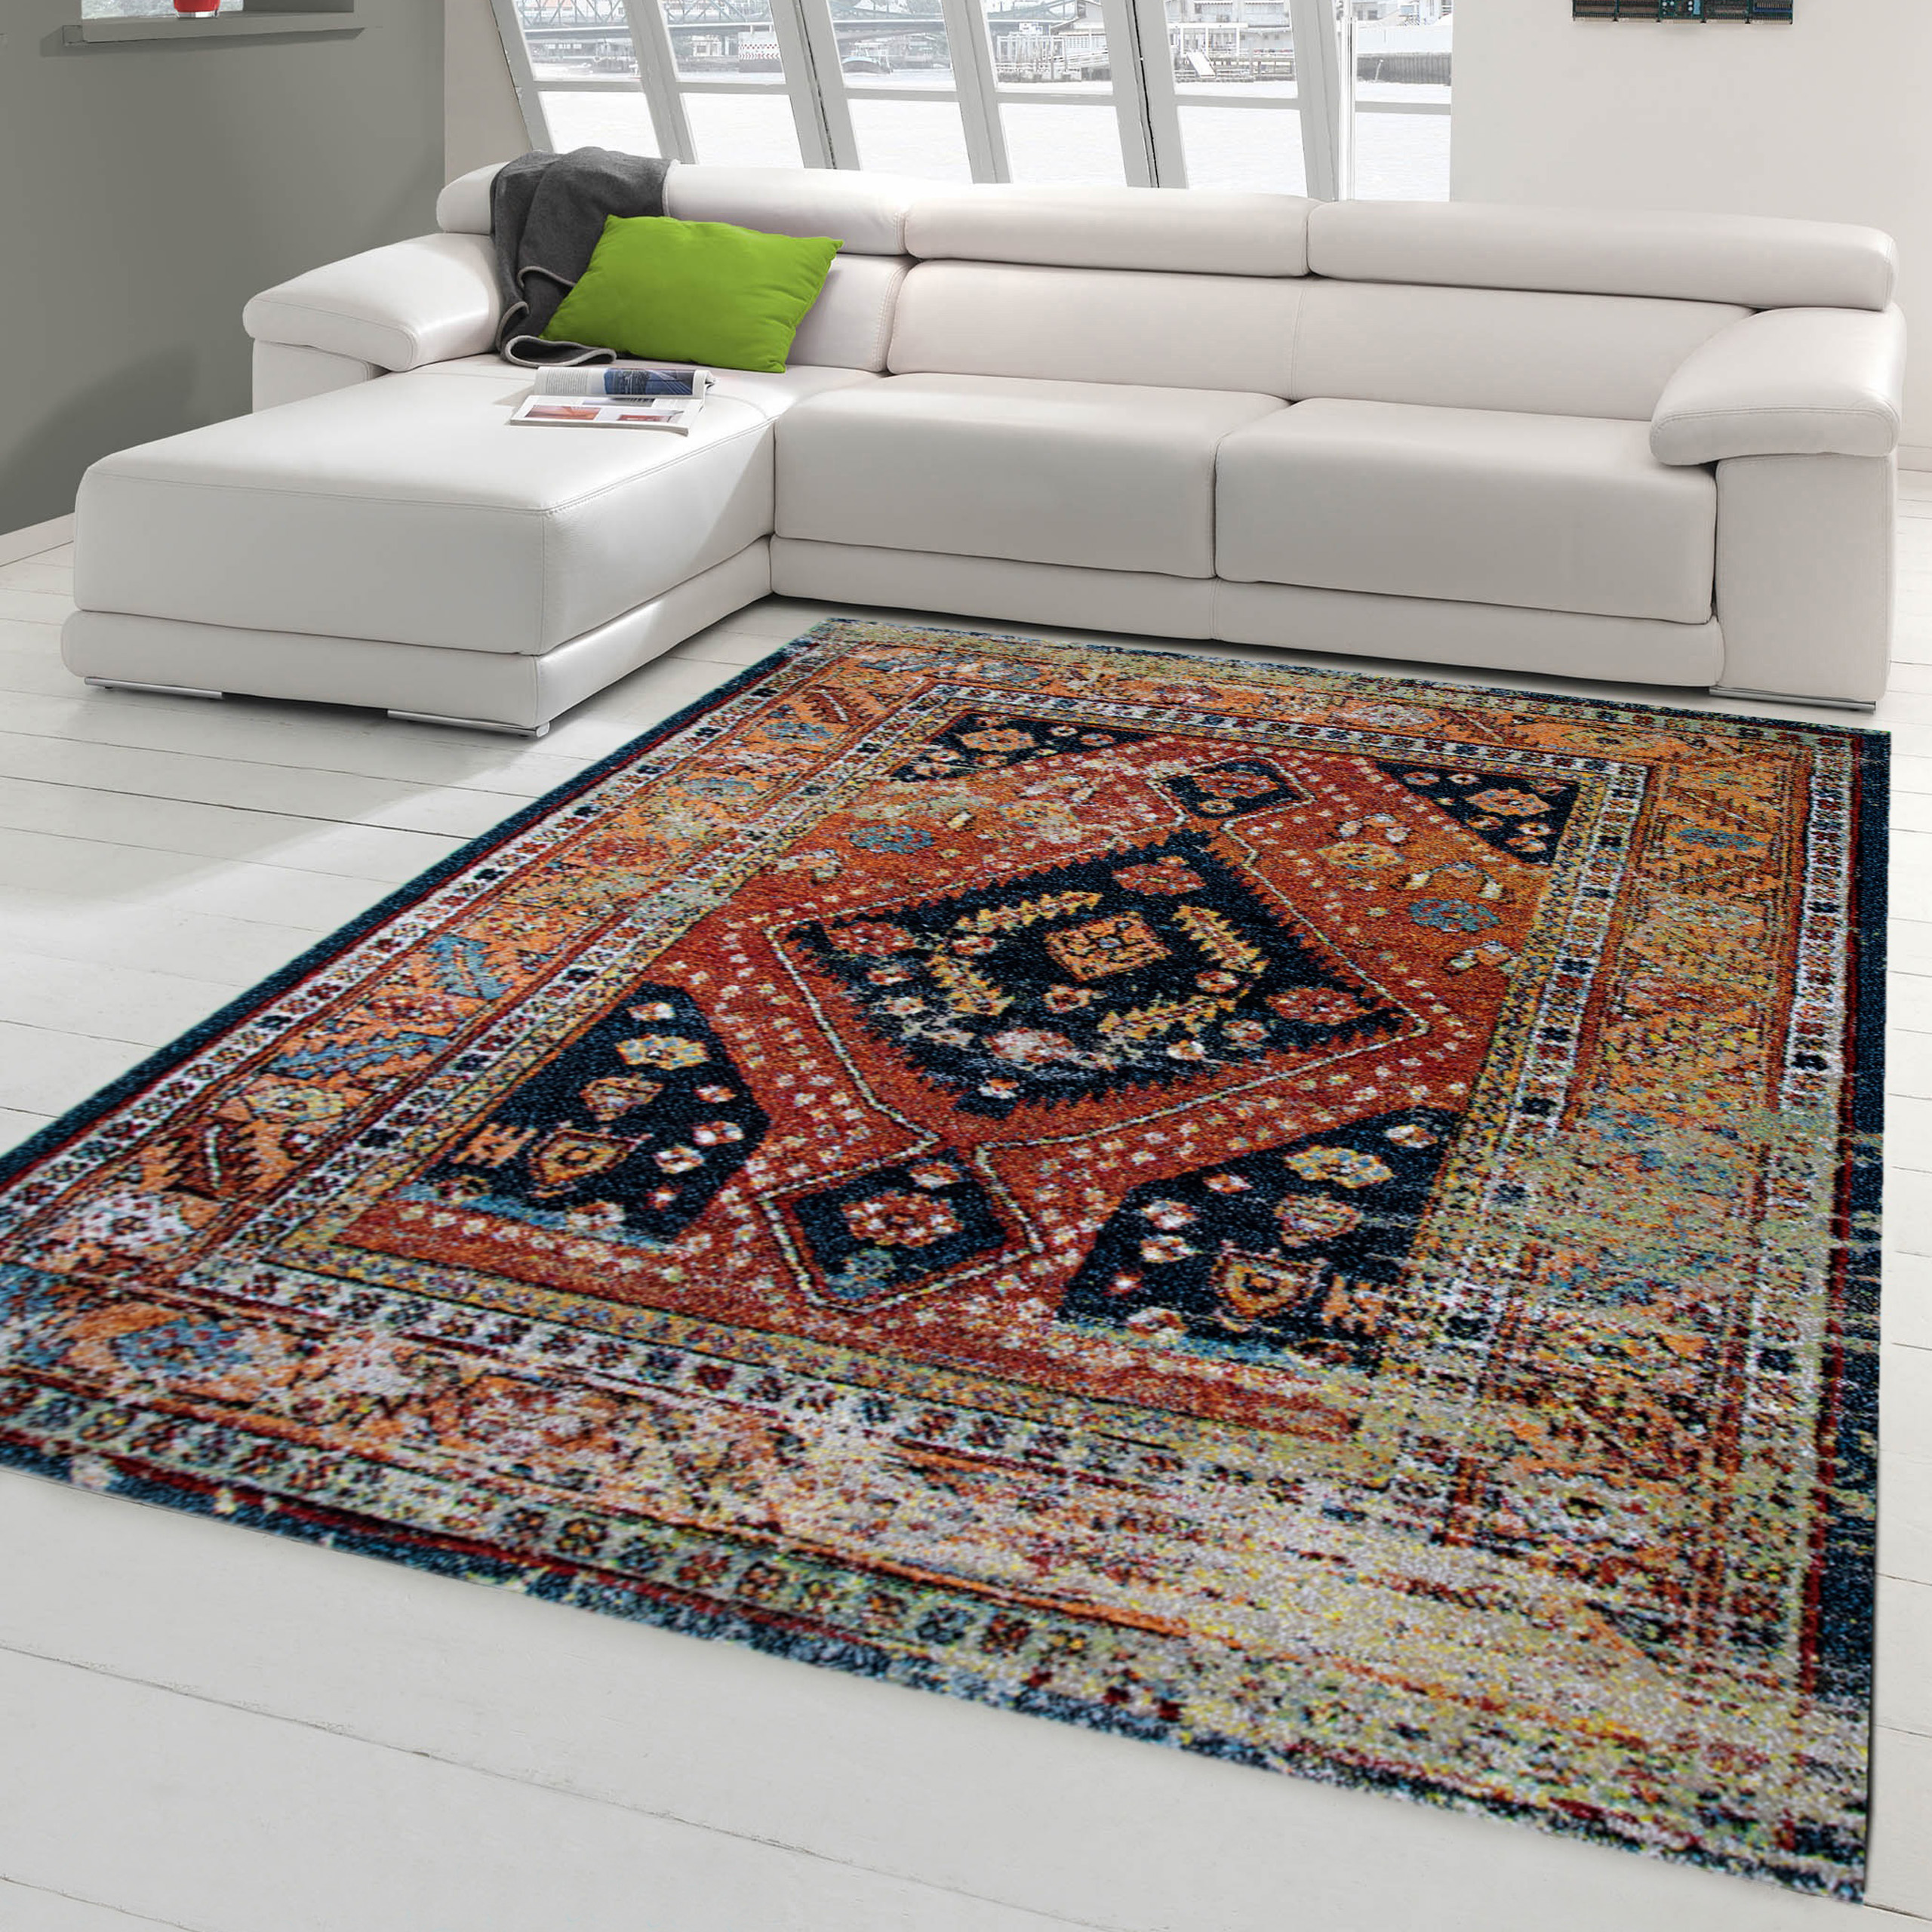 carpets: - carpet & Modern cheap Teppich -Traum and dreams designer at High-quality